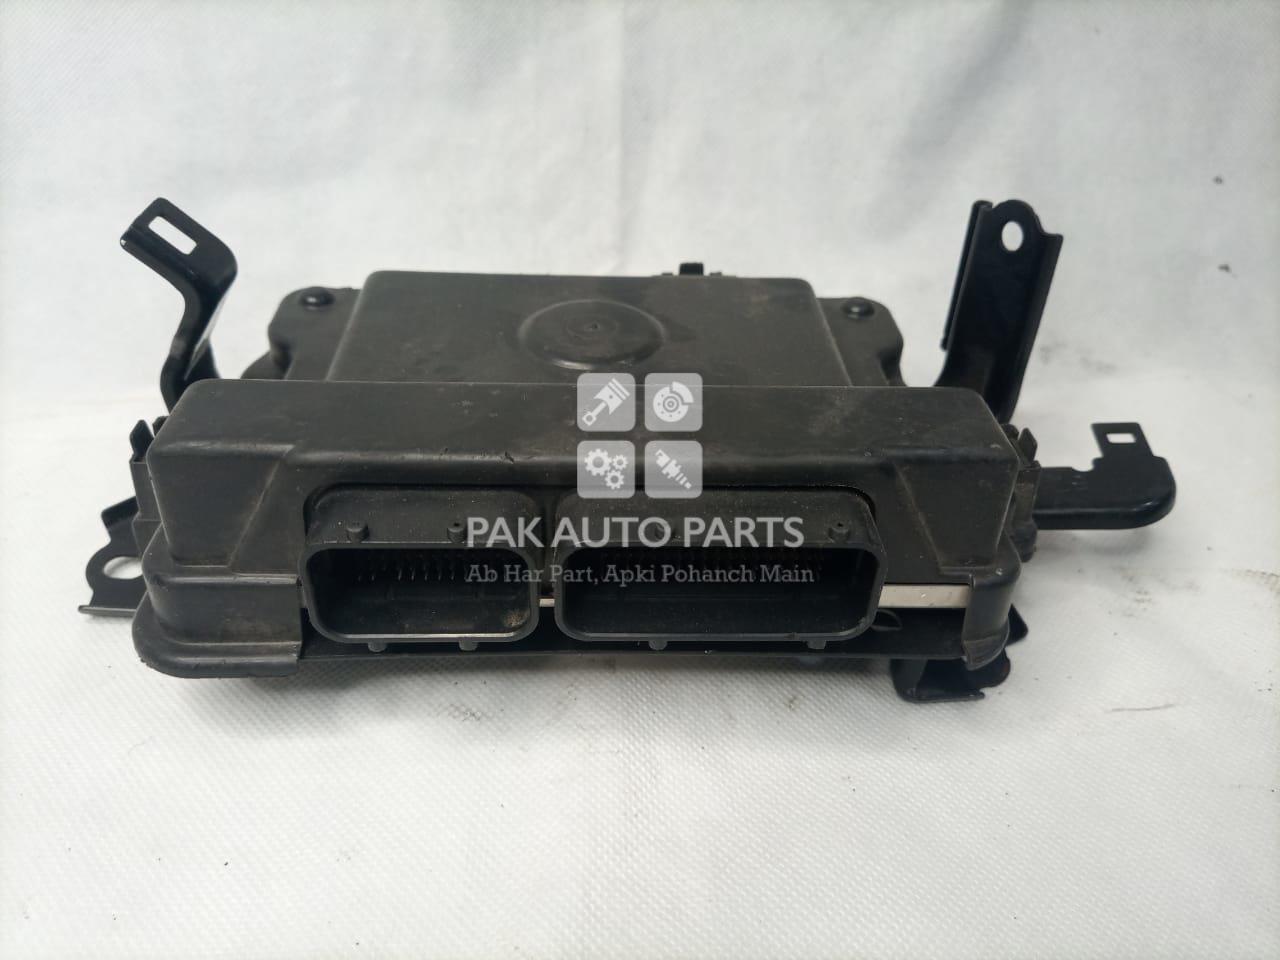 Picture of Daihatsu Cast Turbo ECU Computer Box